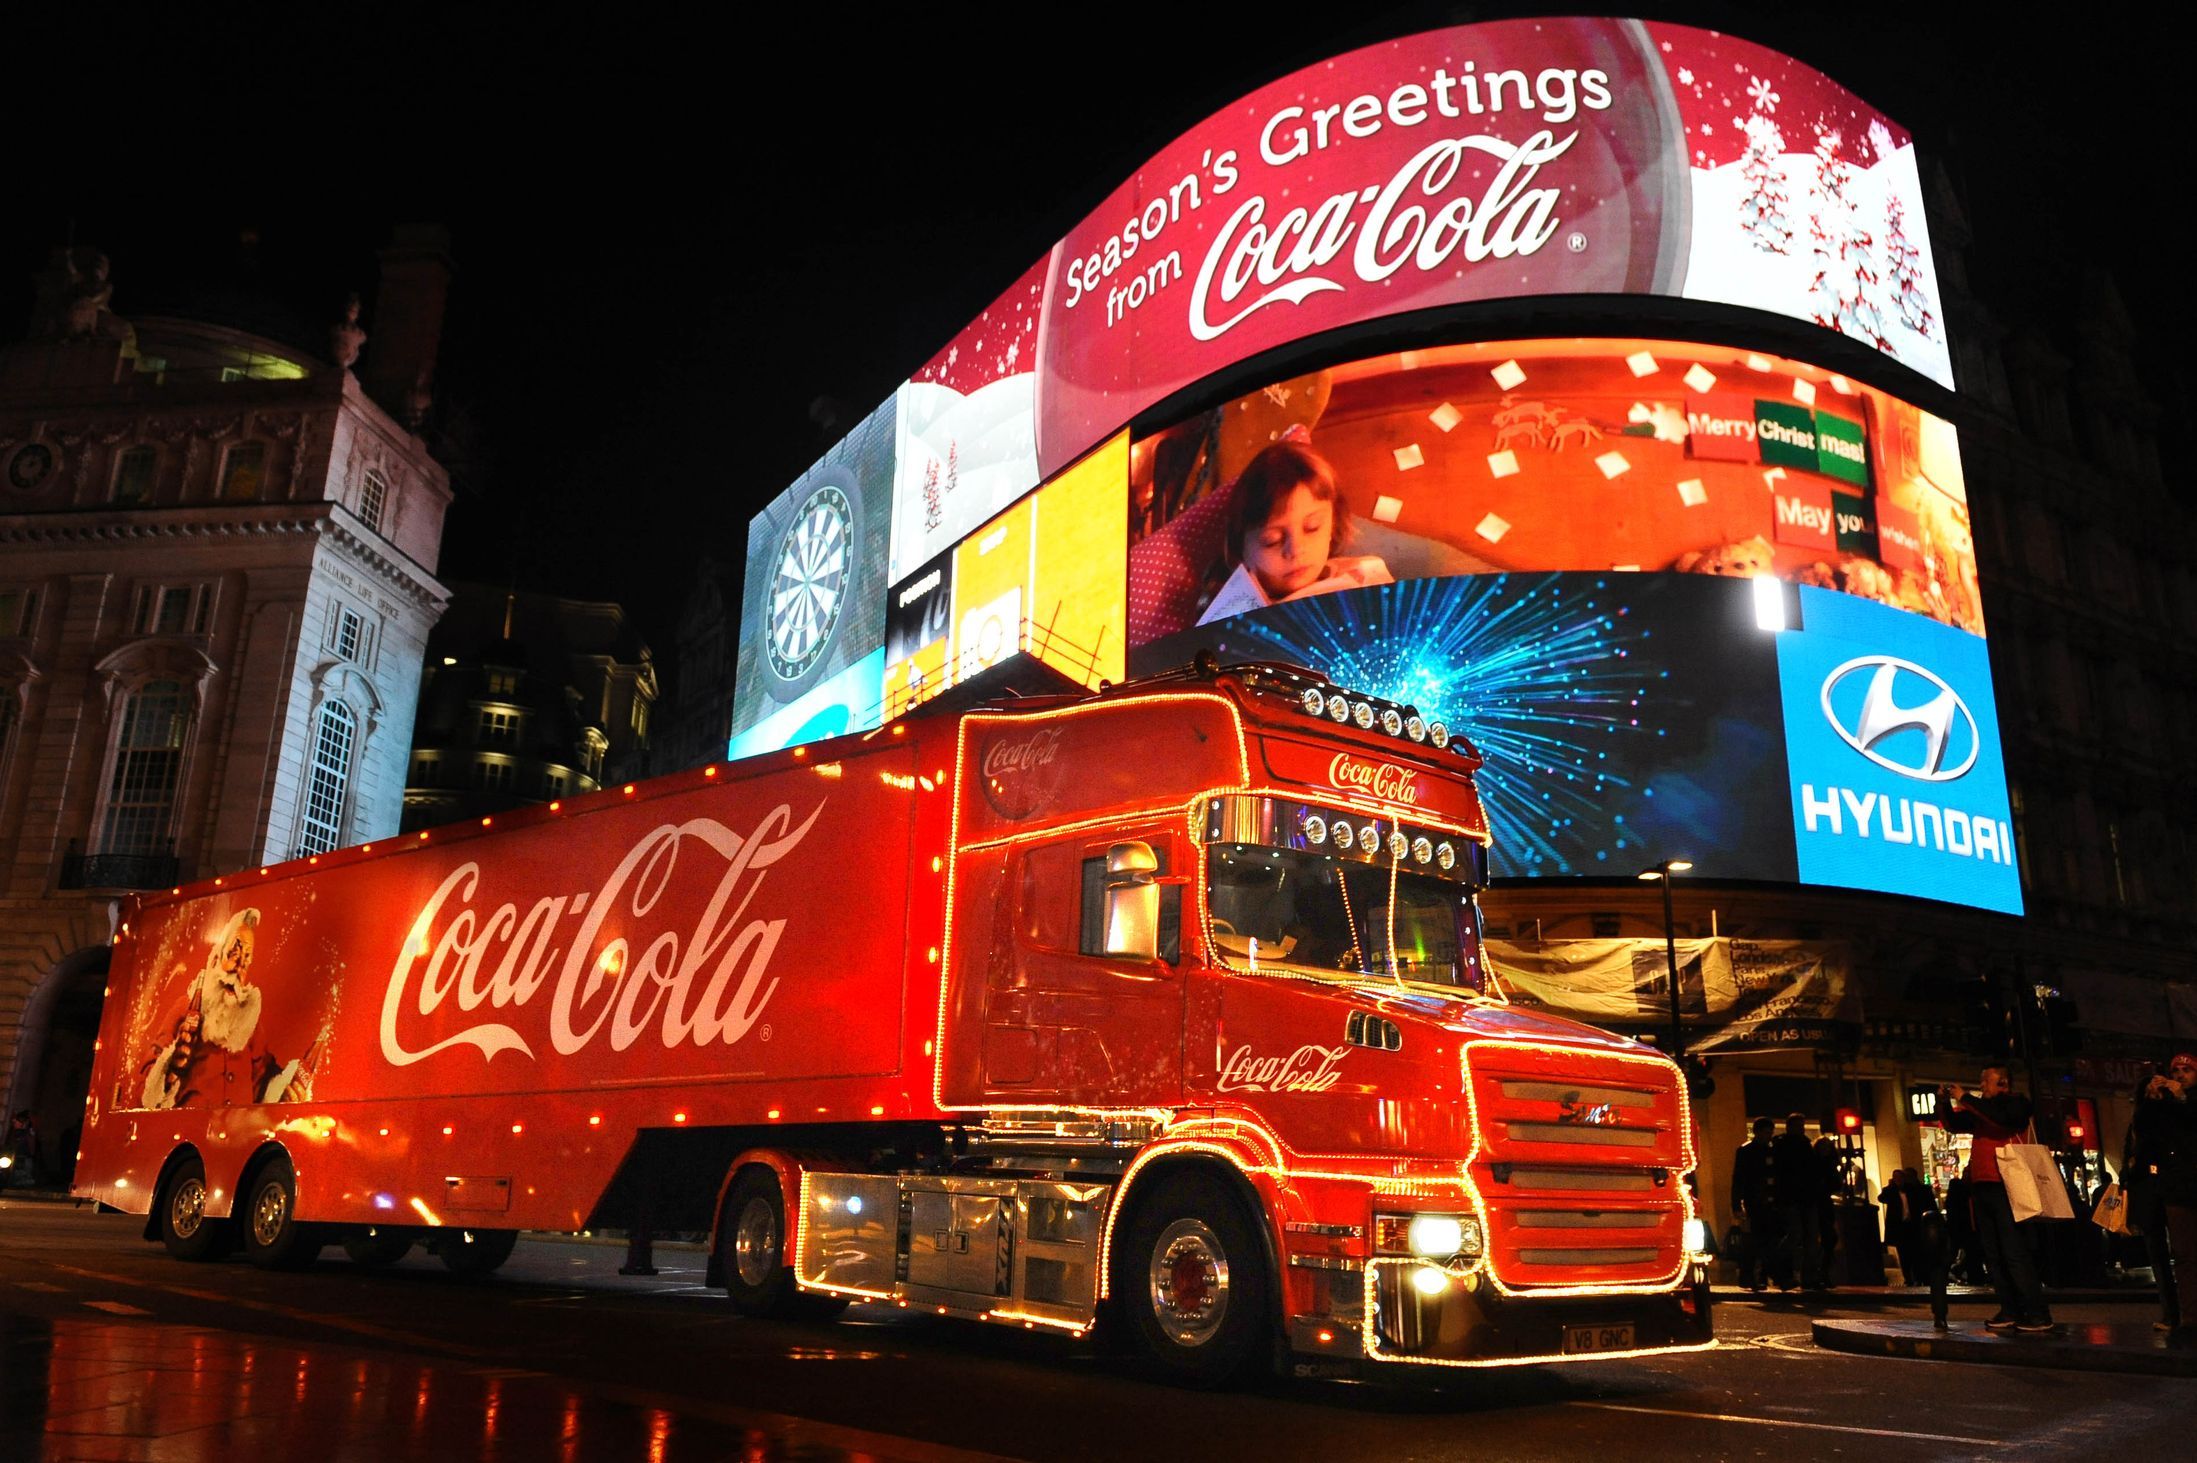 Coca Cola Christmas Truck Wallpapers Wallpaper Cave